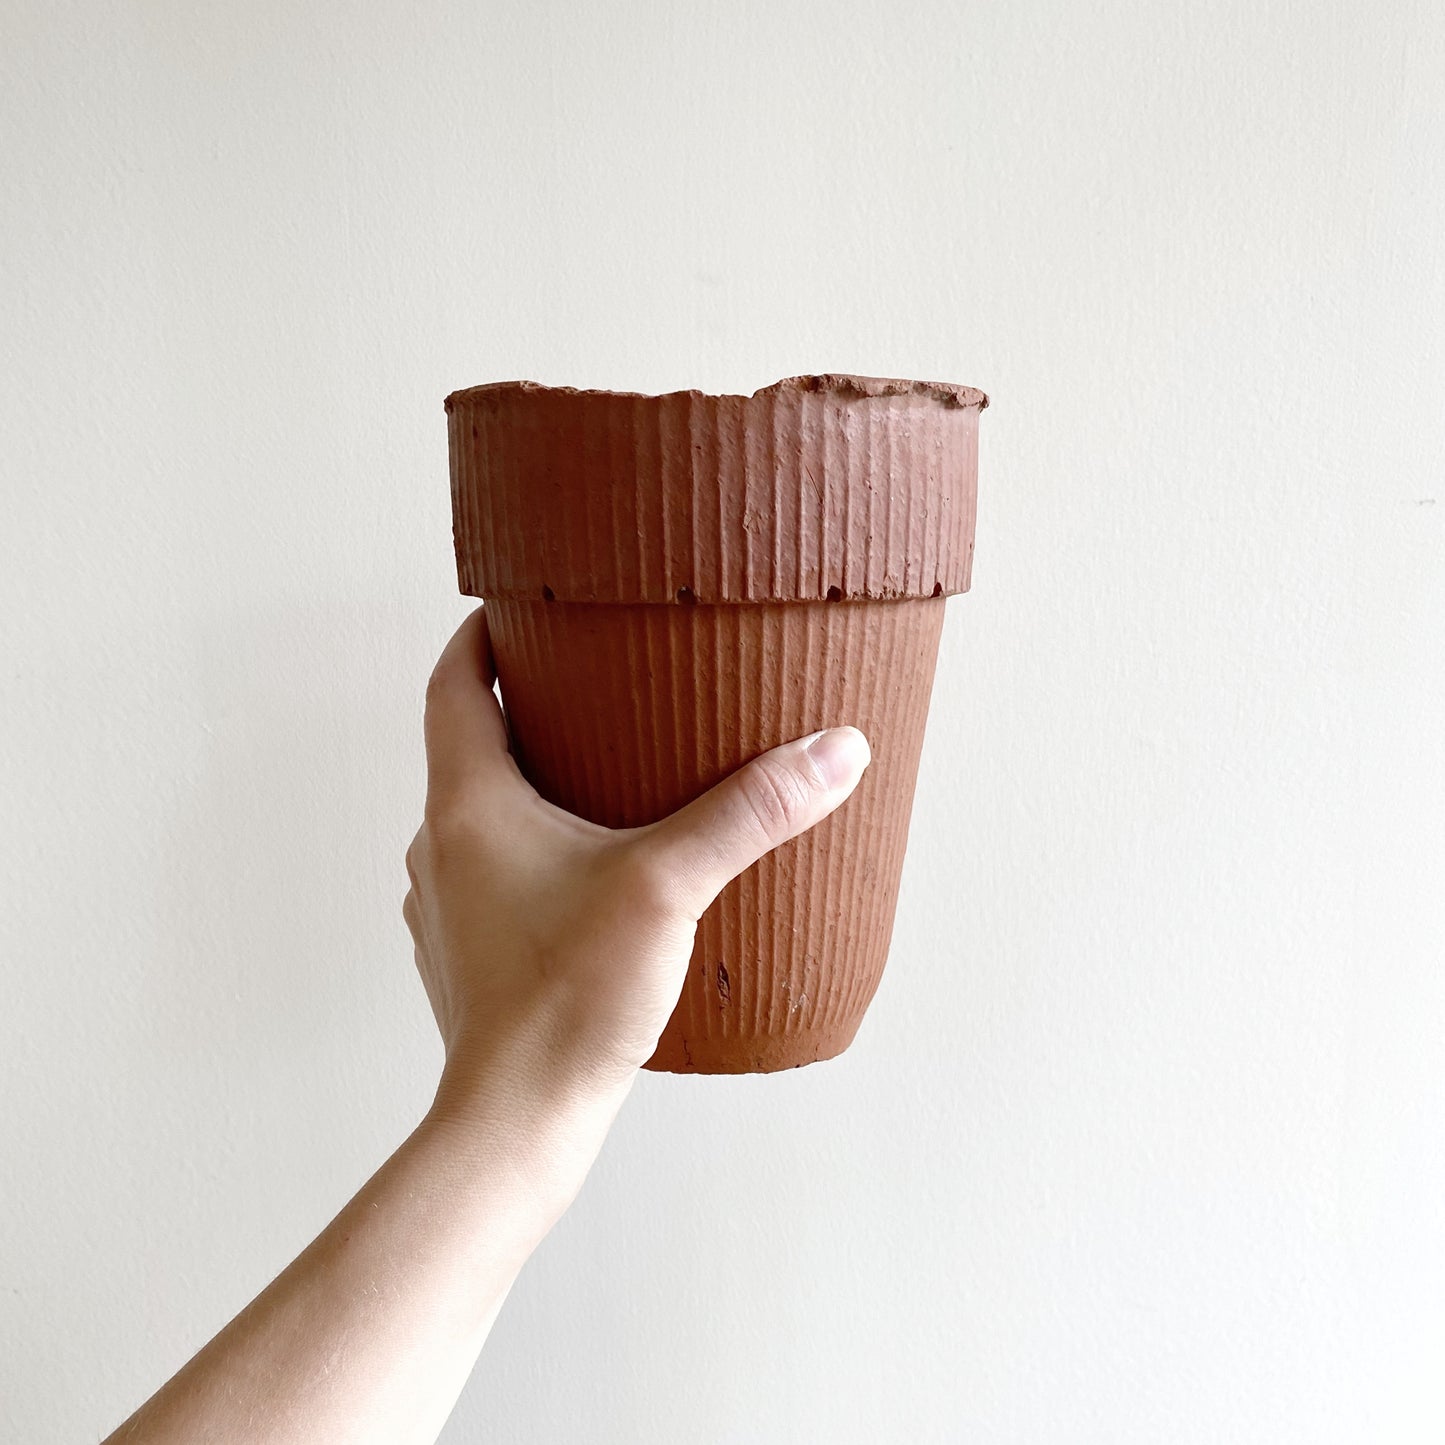 Antique Terracotta Terpentine Pot | Herty Cup